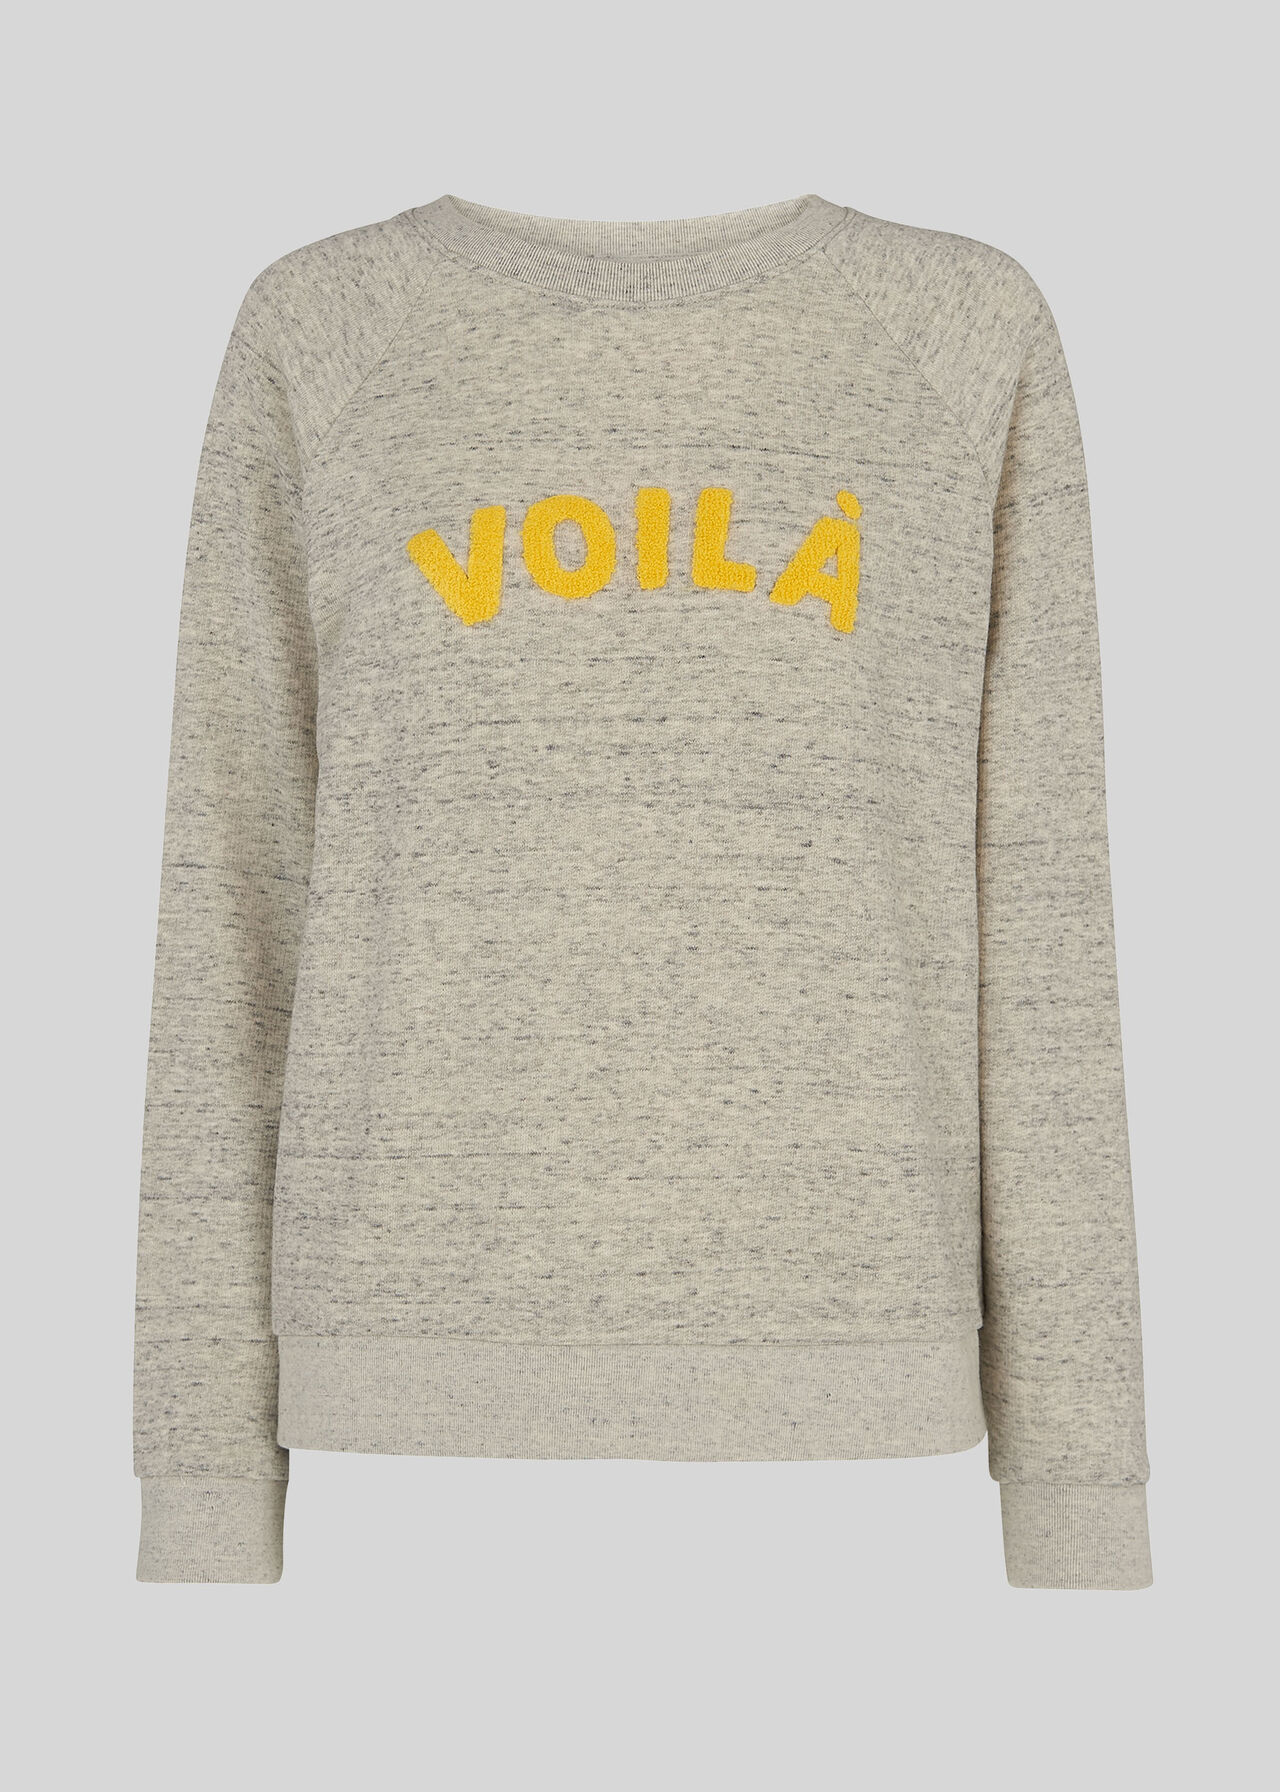 Grey Marl Voila Logo Sweatshirt | WHISTLES